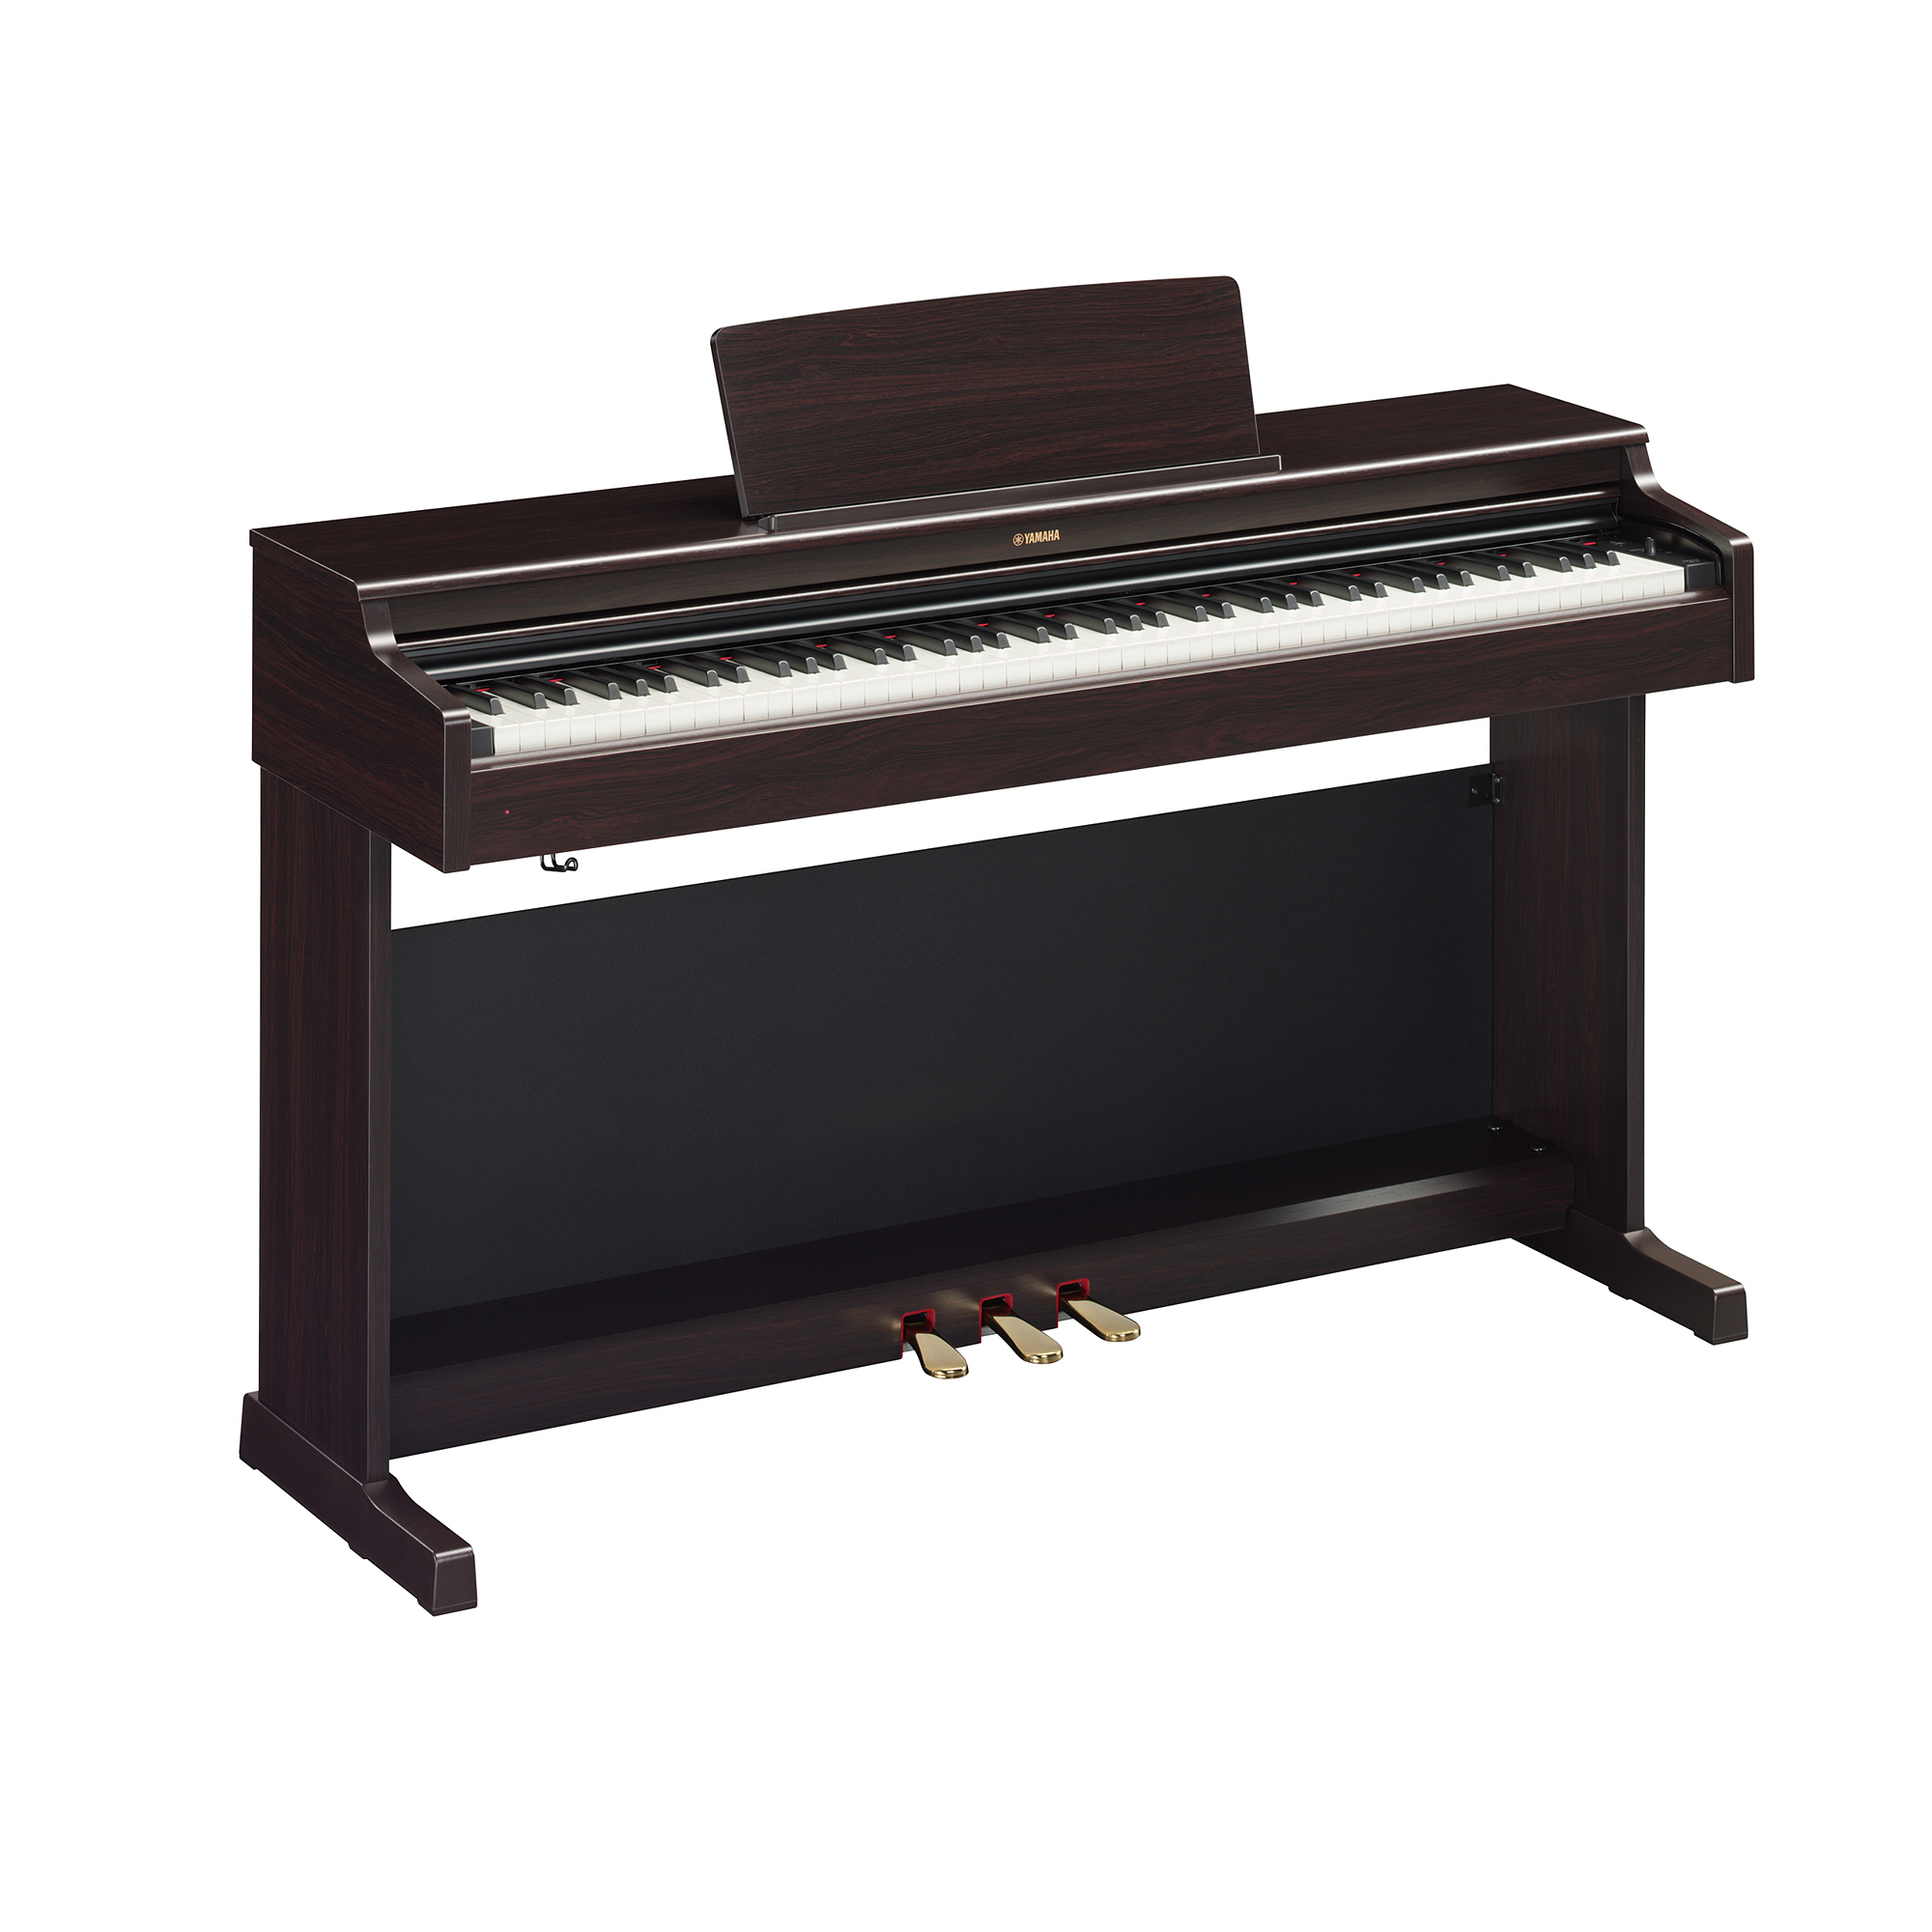 Yamaha Ydp164 Digital Piano - Rosewood